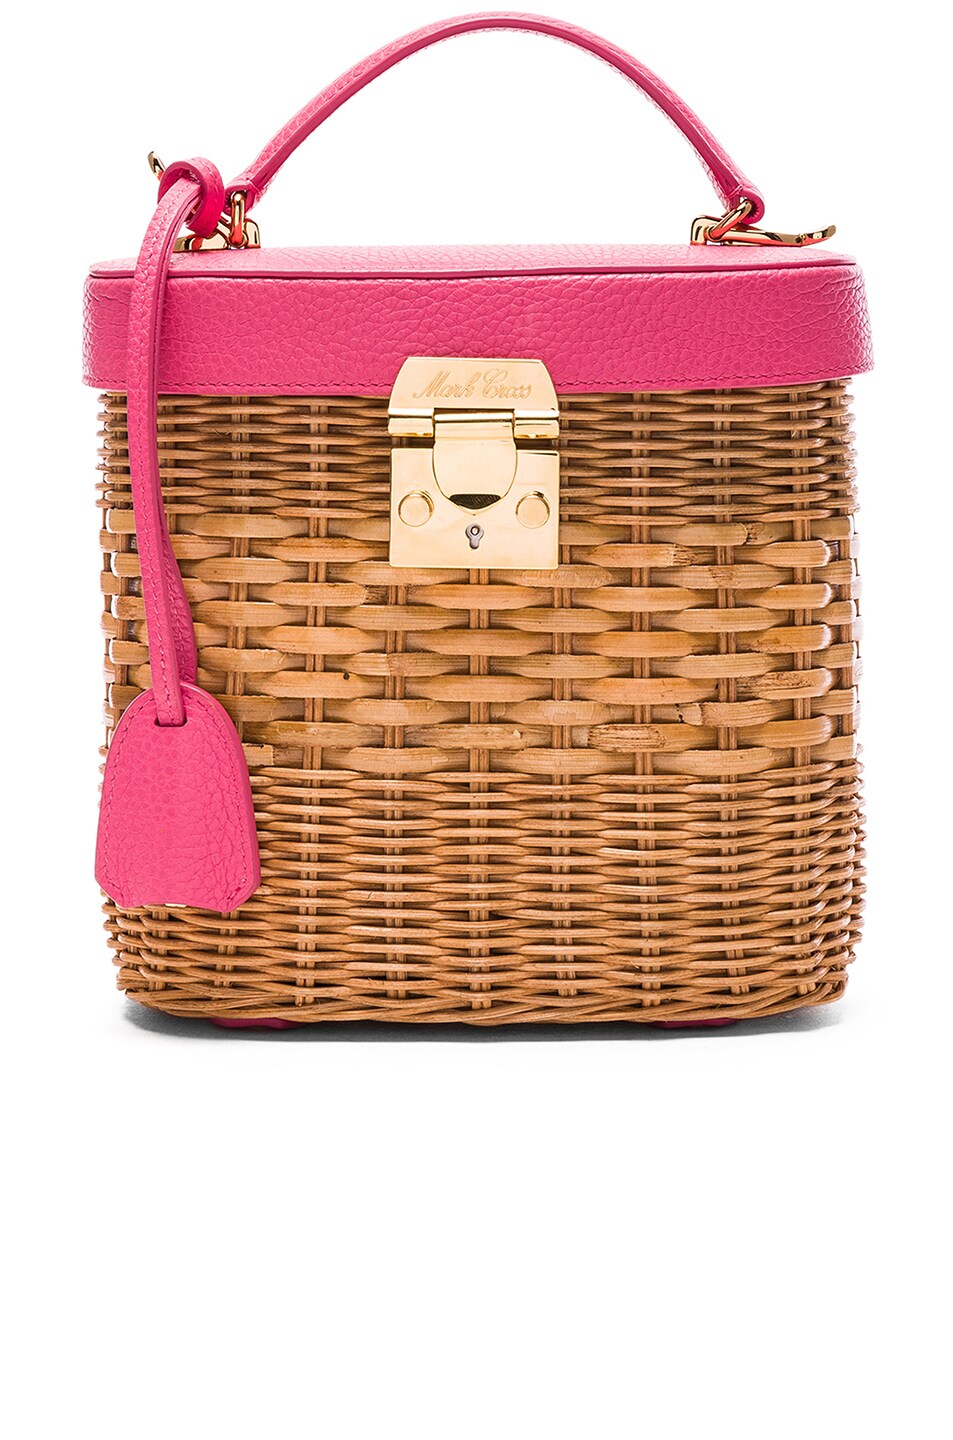 Image 1 of Mark Cross Benchley Rattan Bag in Raspberry Pink Pebble & Rattan